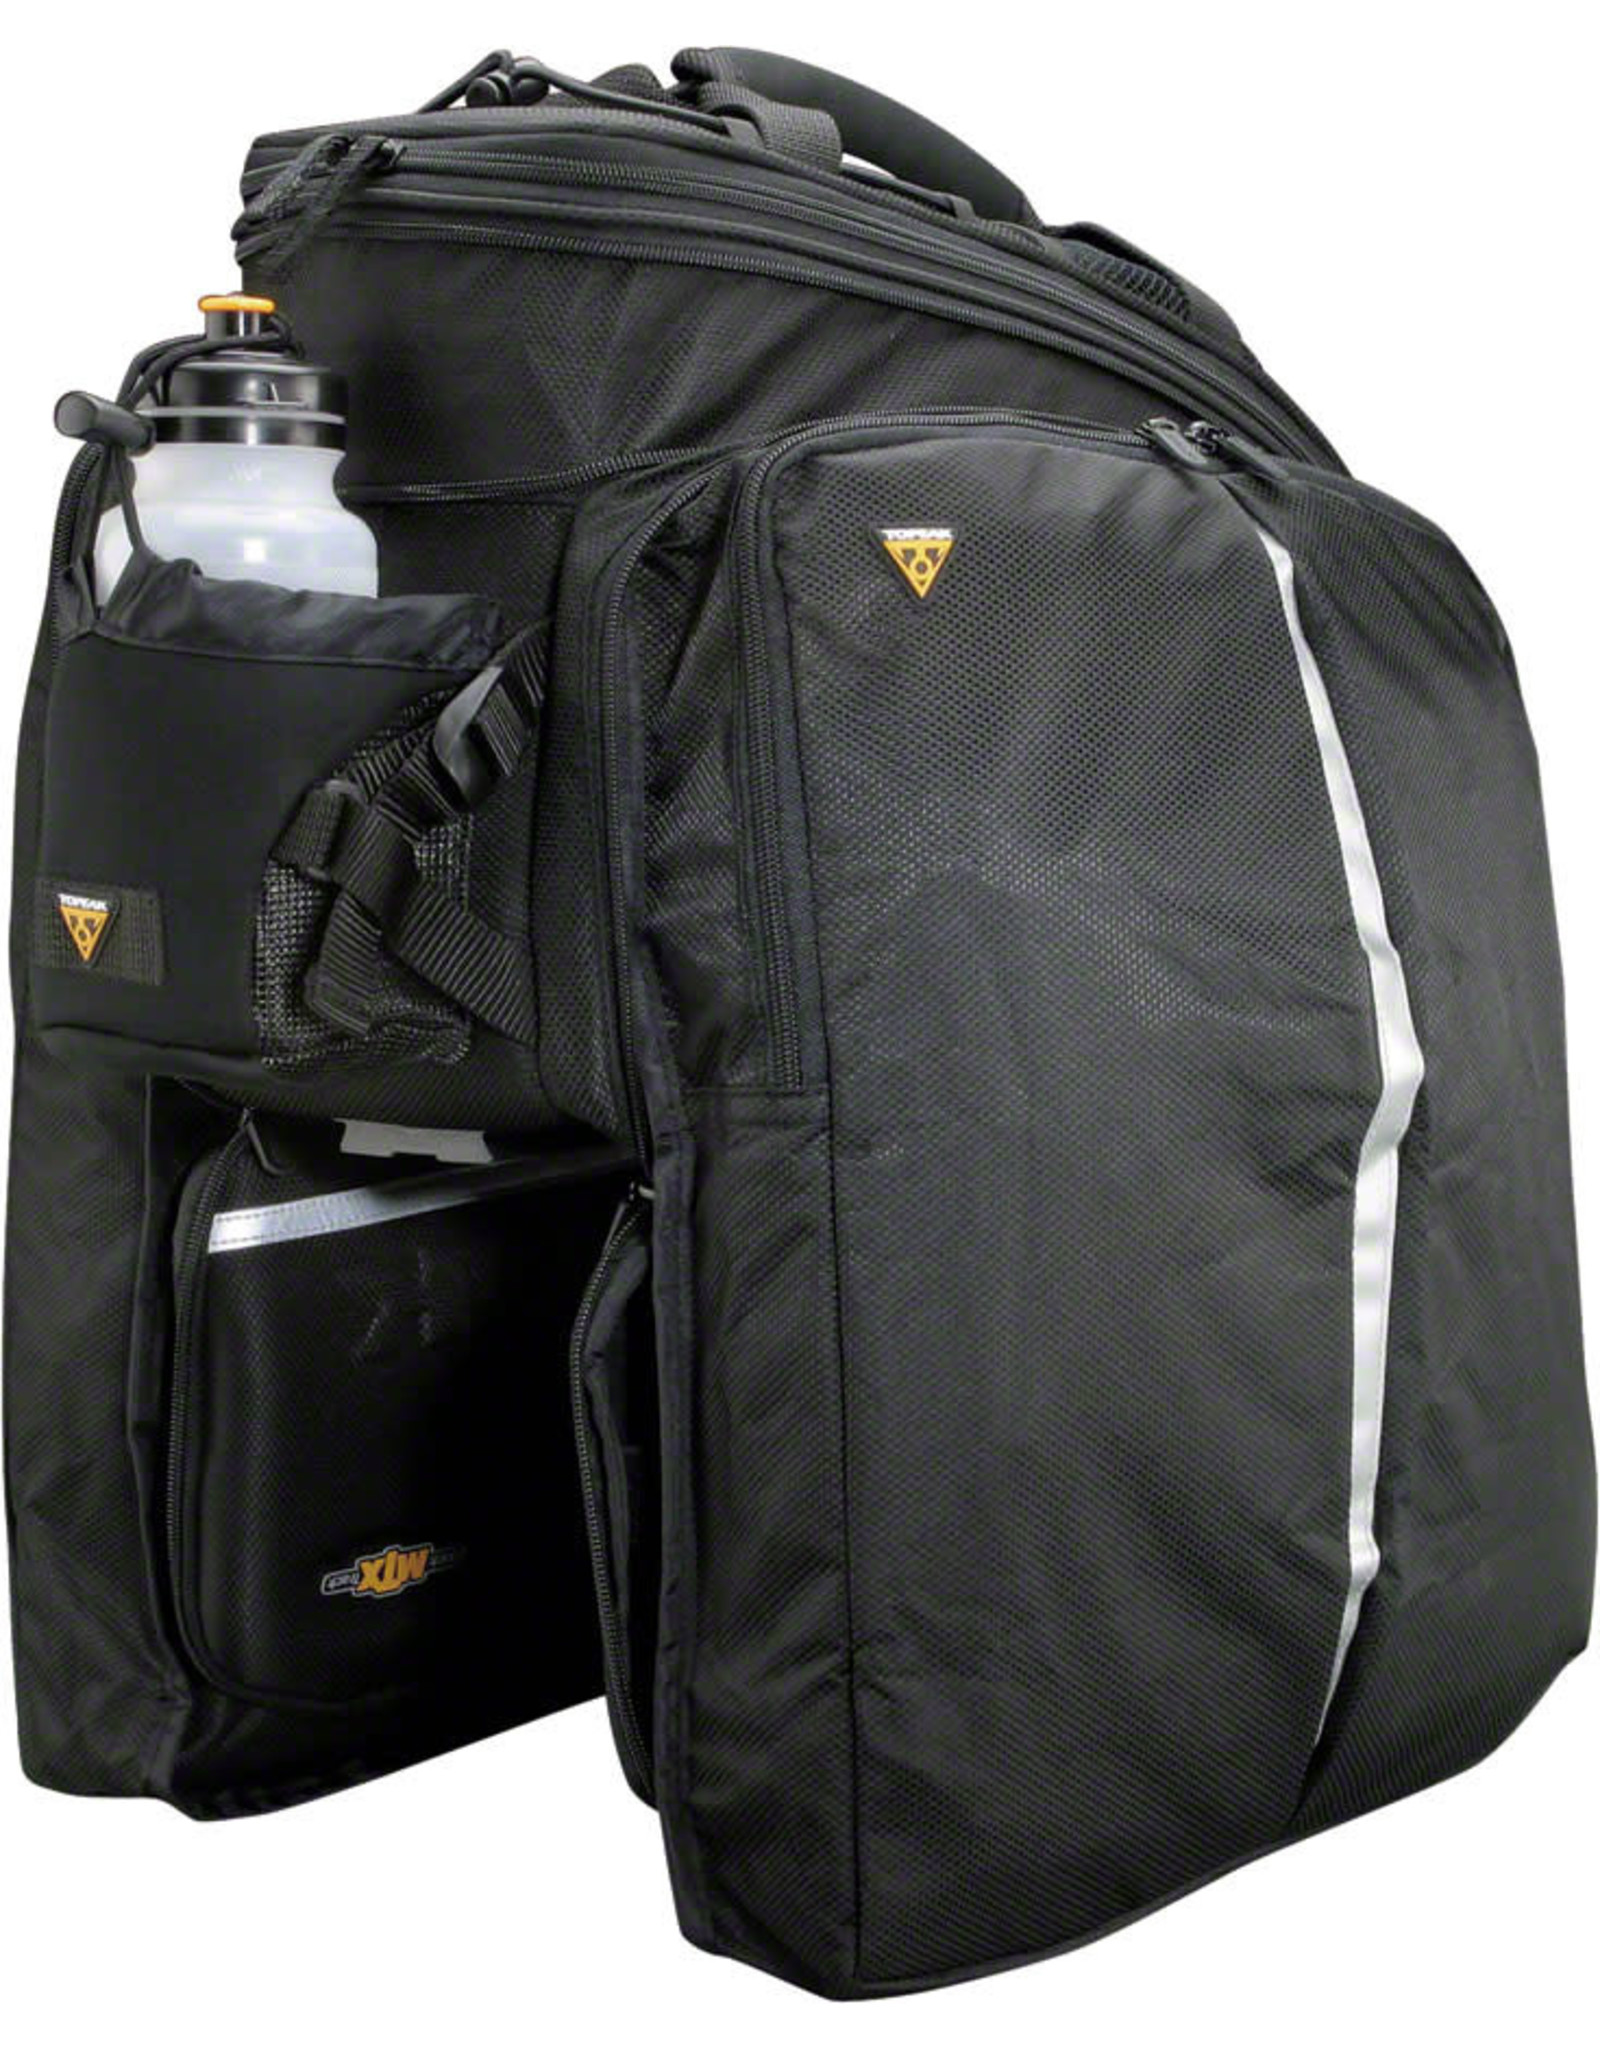 Topeak Topeak MTX TrunkBag DXP Rack Bag with Expandable Panniers: 22.6 Liter, Black